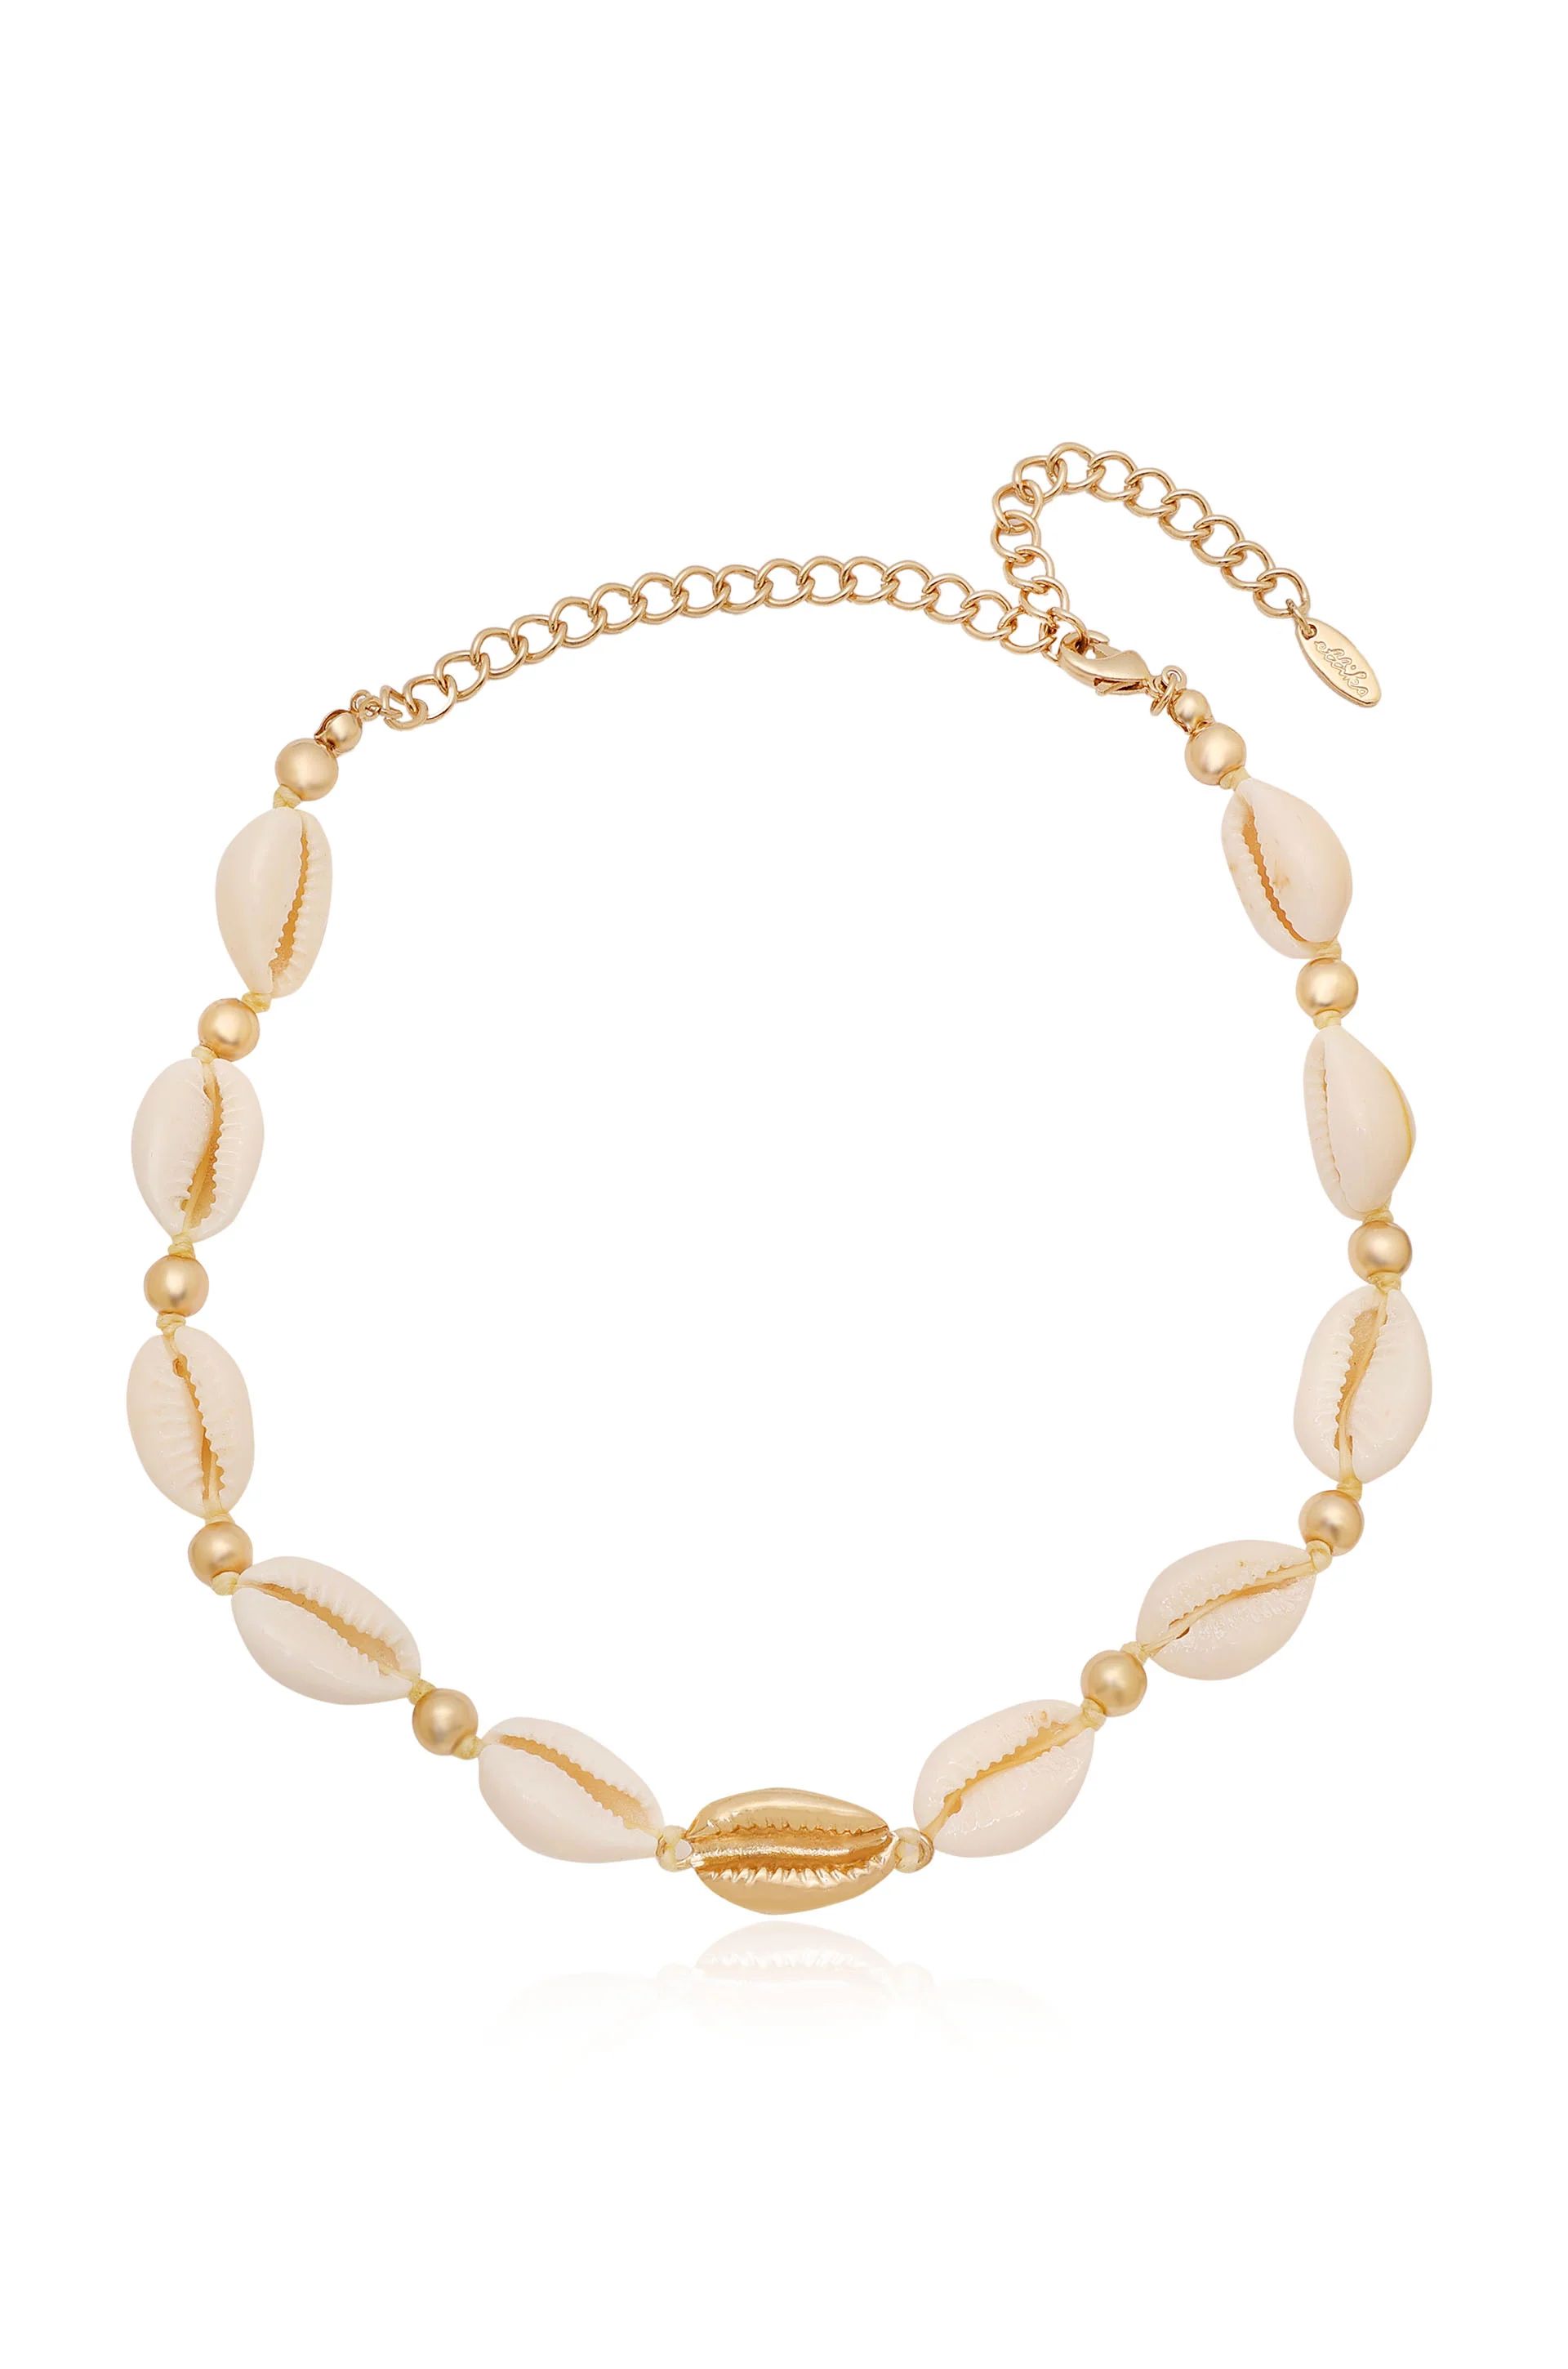 Ettika Jewelry | Shell & 18kt Gold Plated Necklace | Ettika